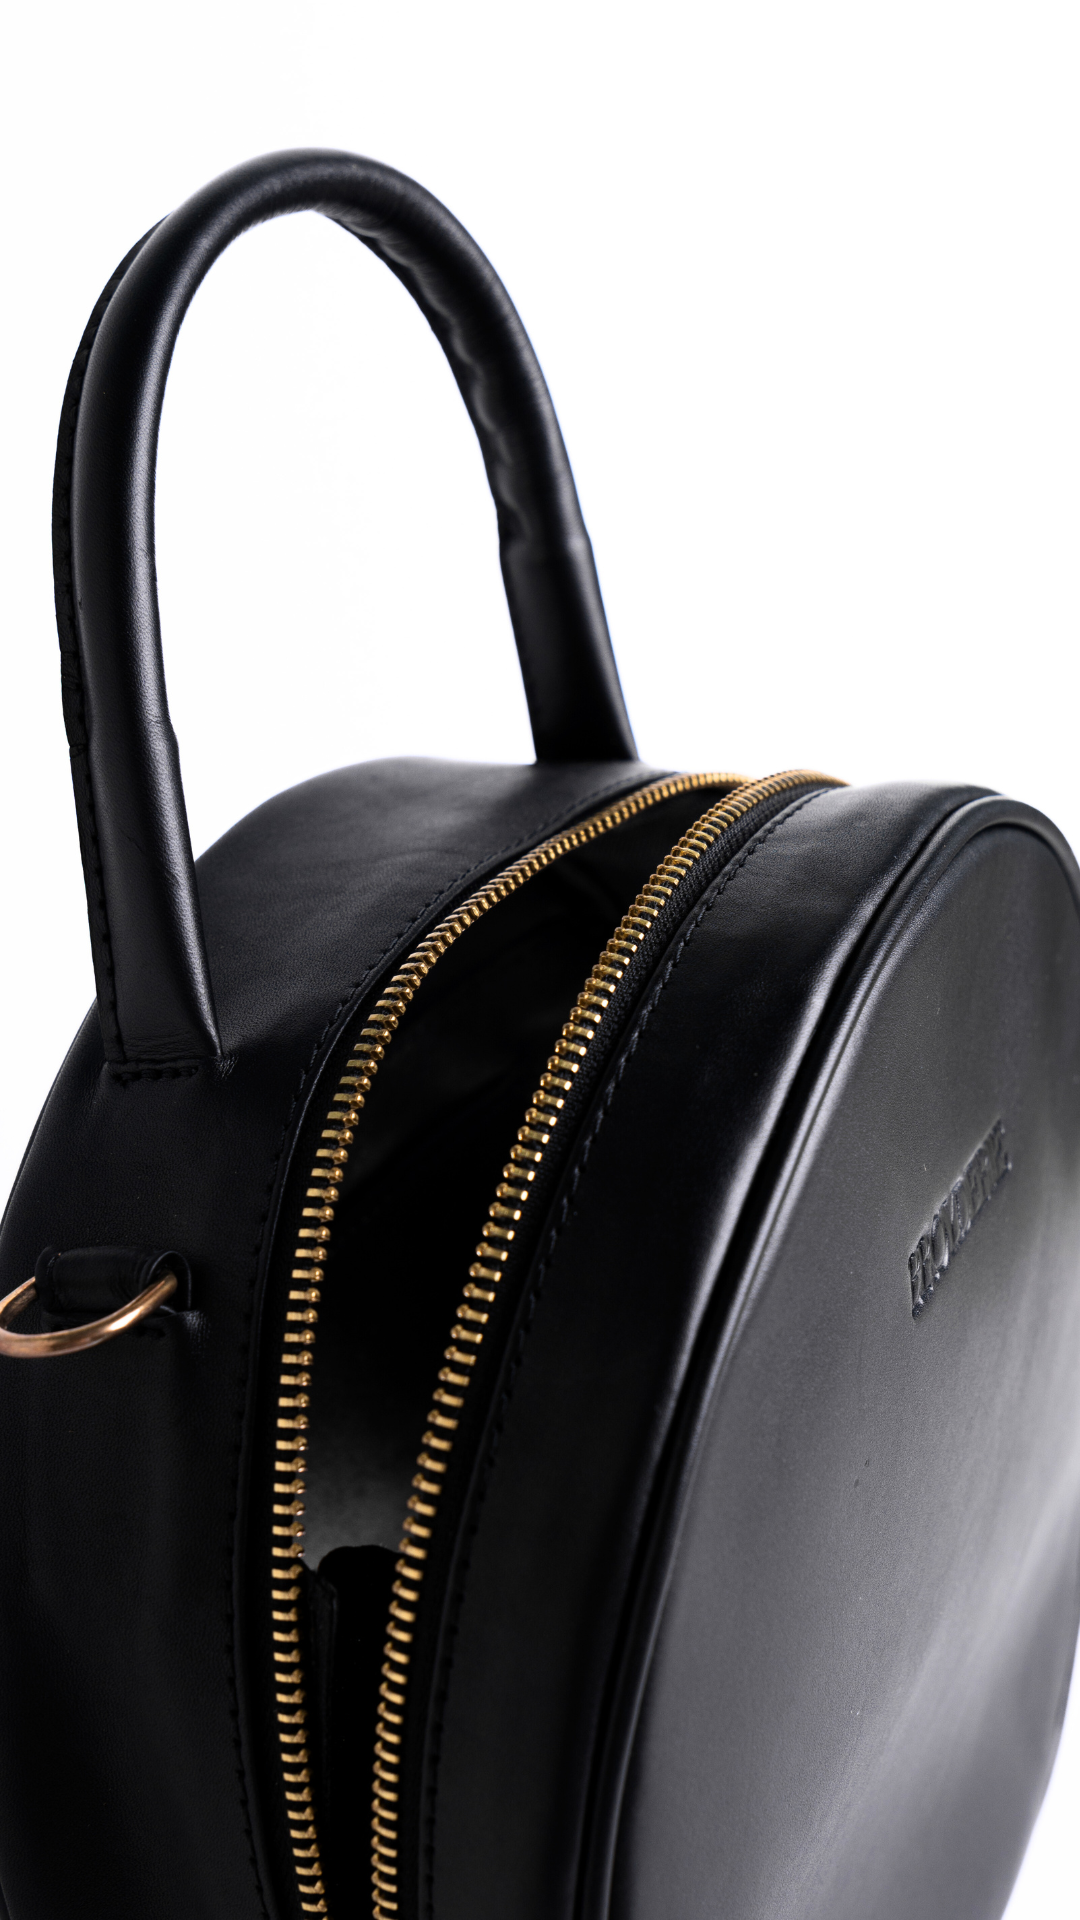 Round Leather Black Bag